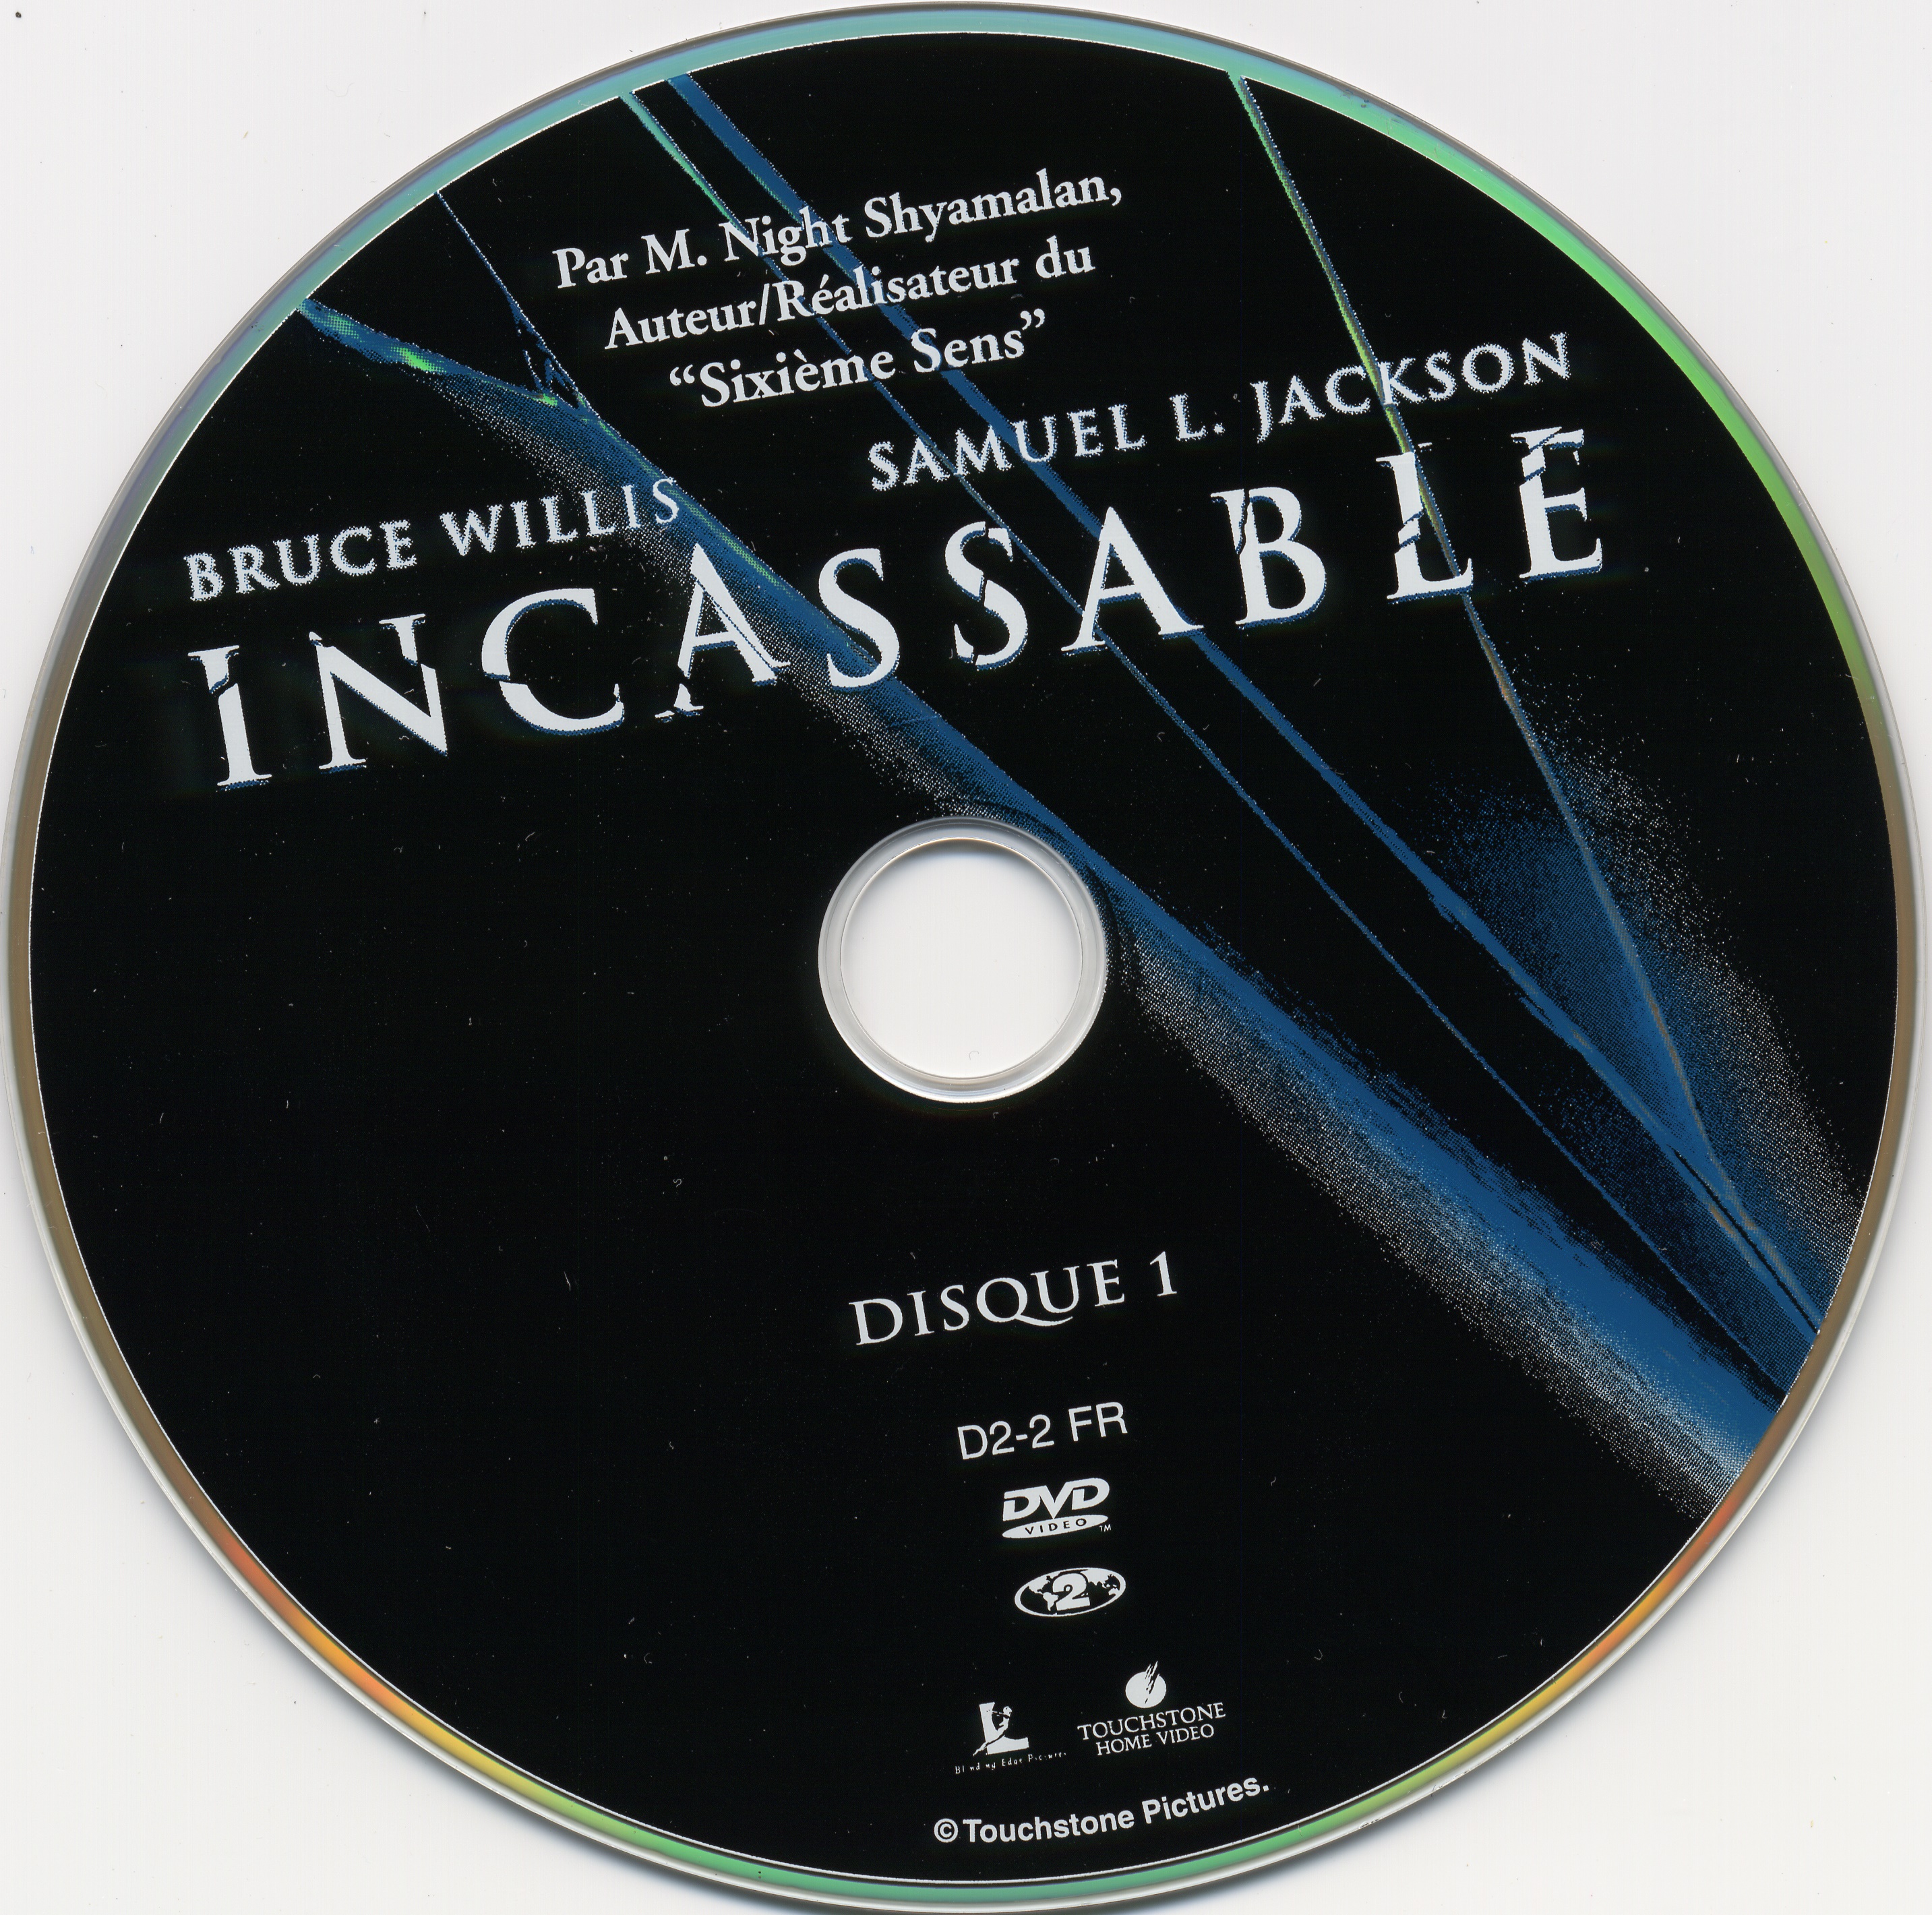 Incassable DISC 1